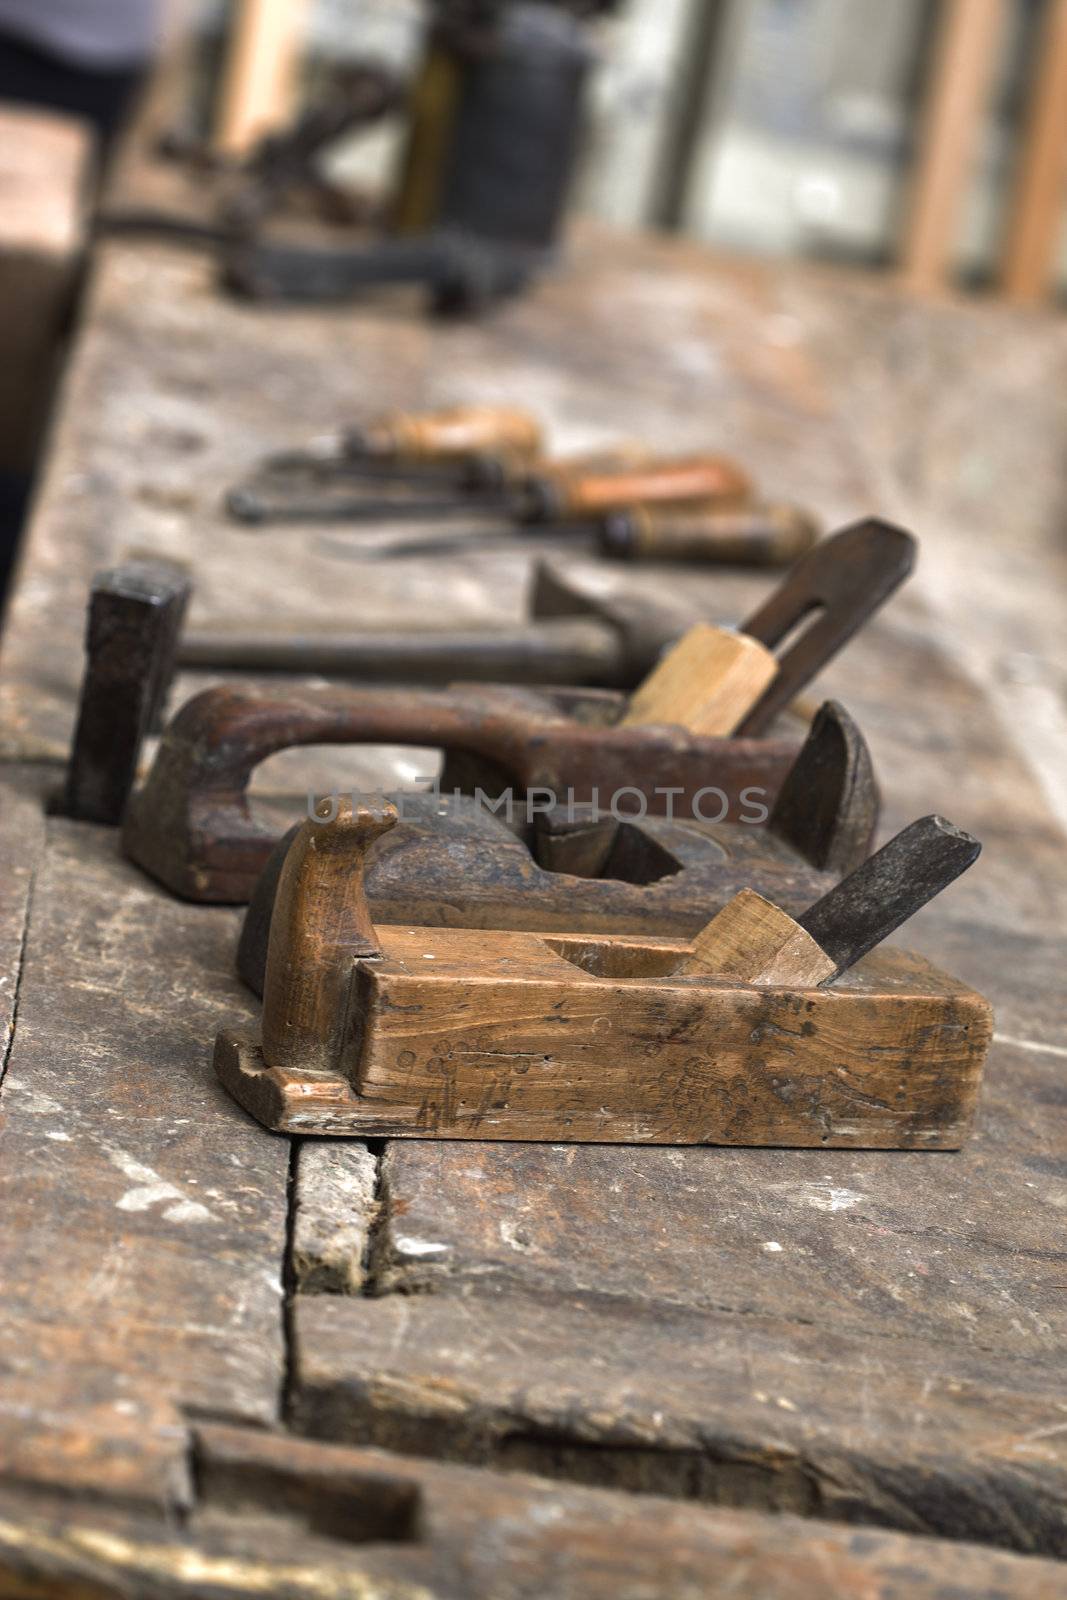 craftsman tools by stokkete